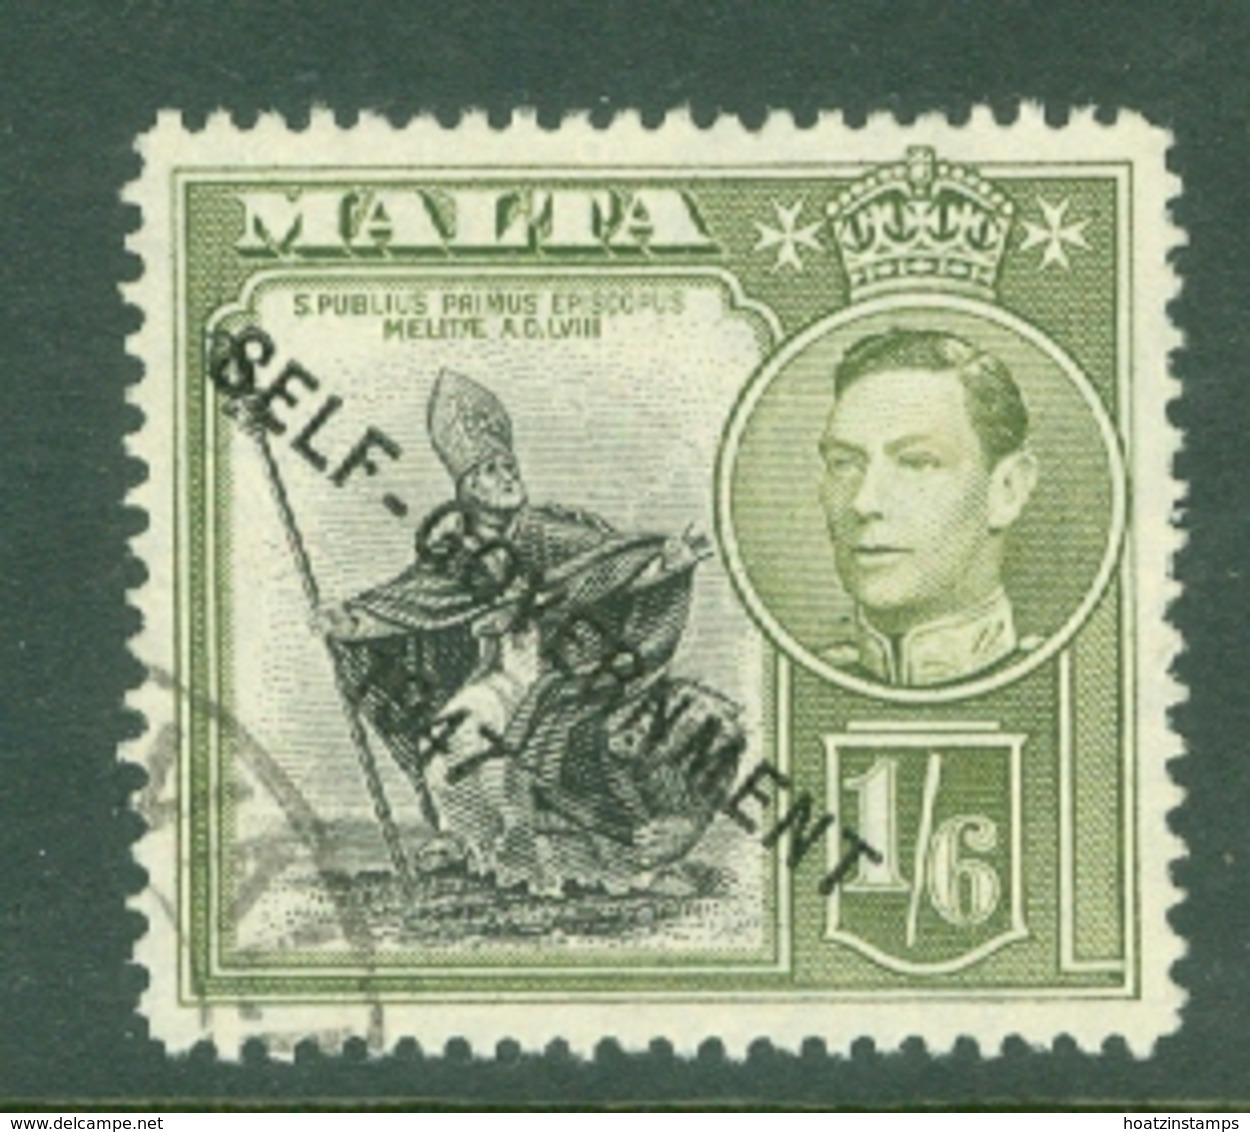 Malta: 1948/53   KGVI 'Self Government' OVPT    SG244    1/6d    Used - Malta (...-1964)